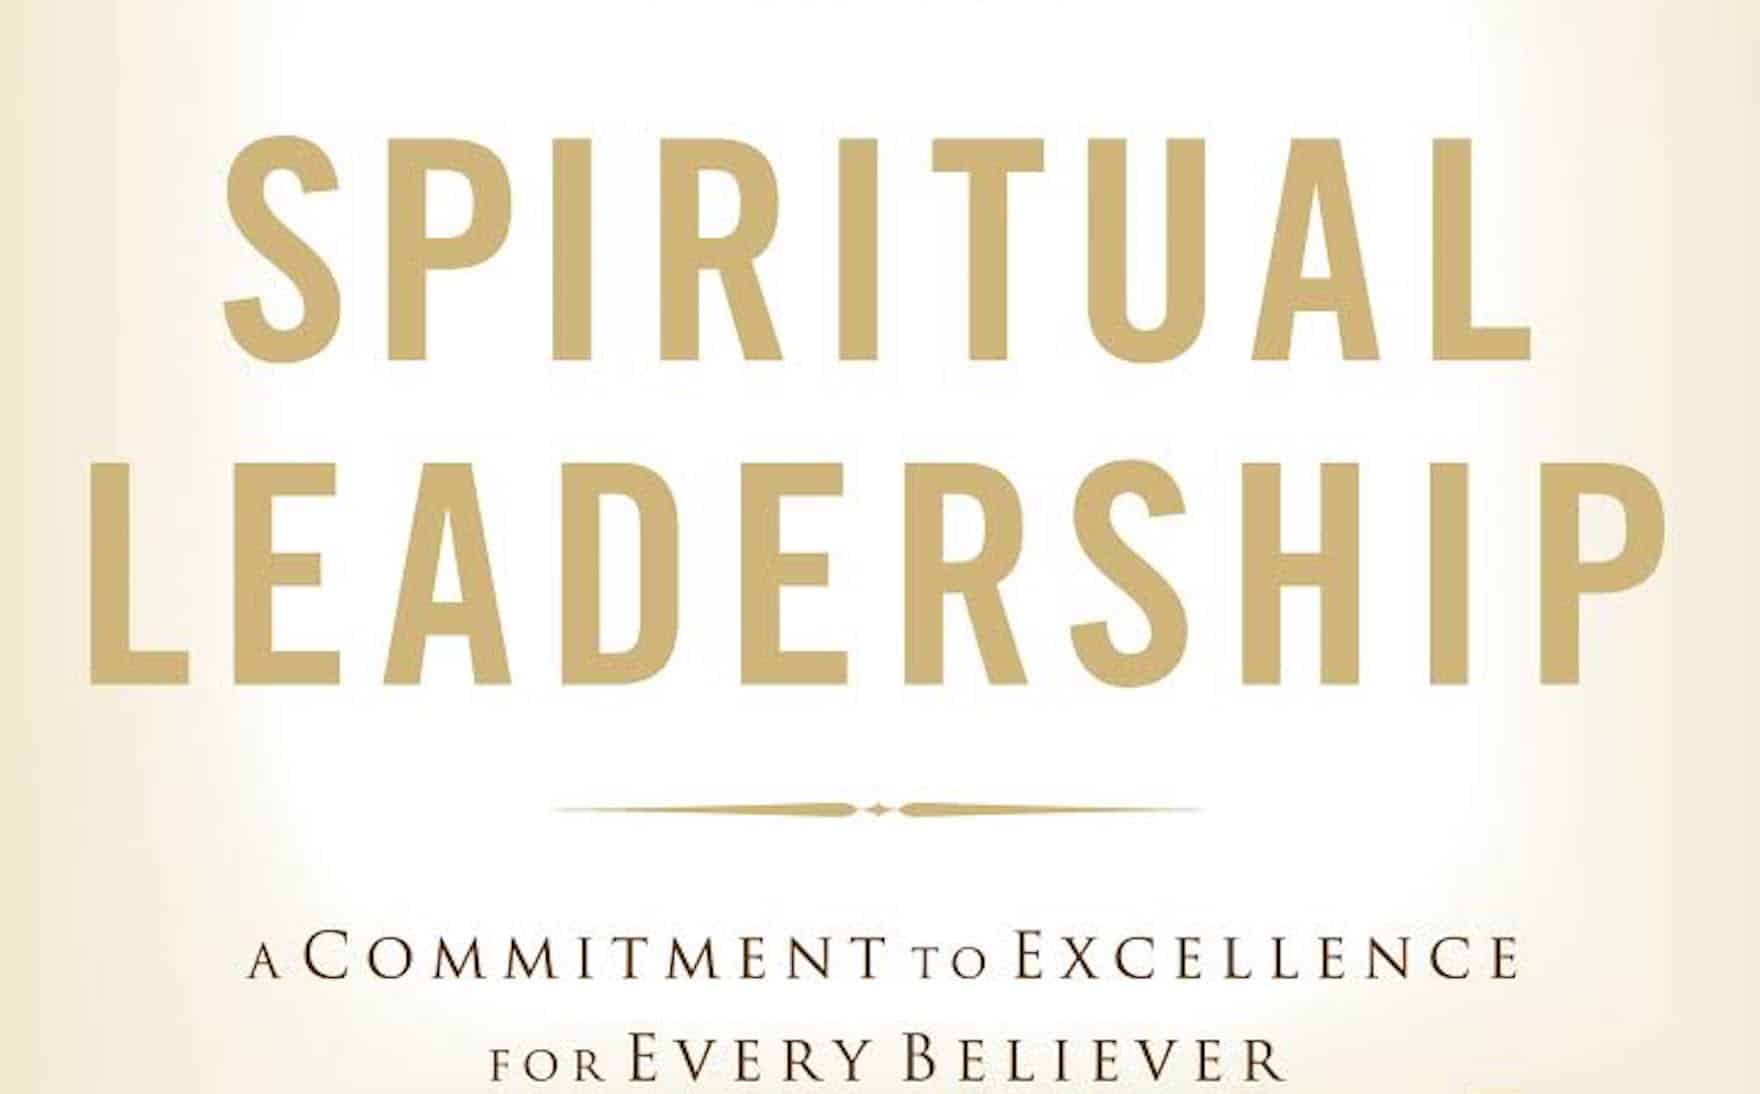 quotes on spiritual leadership